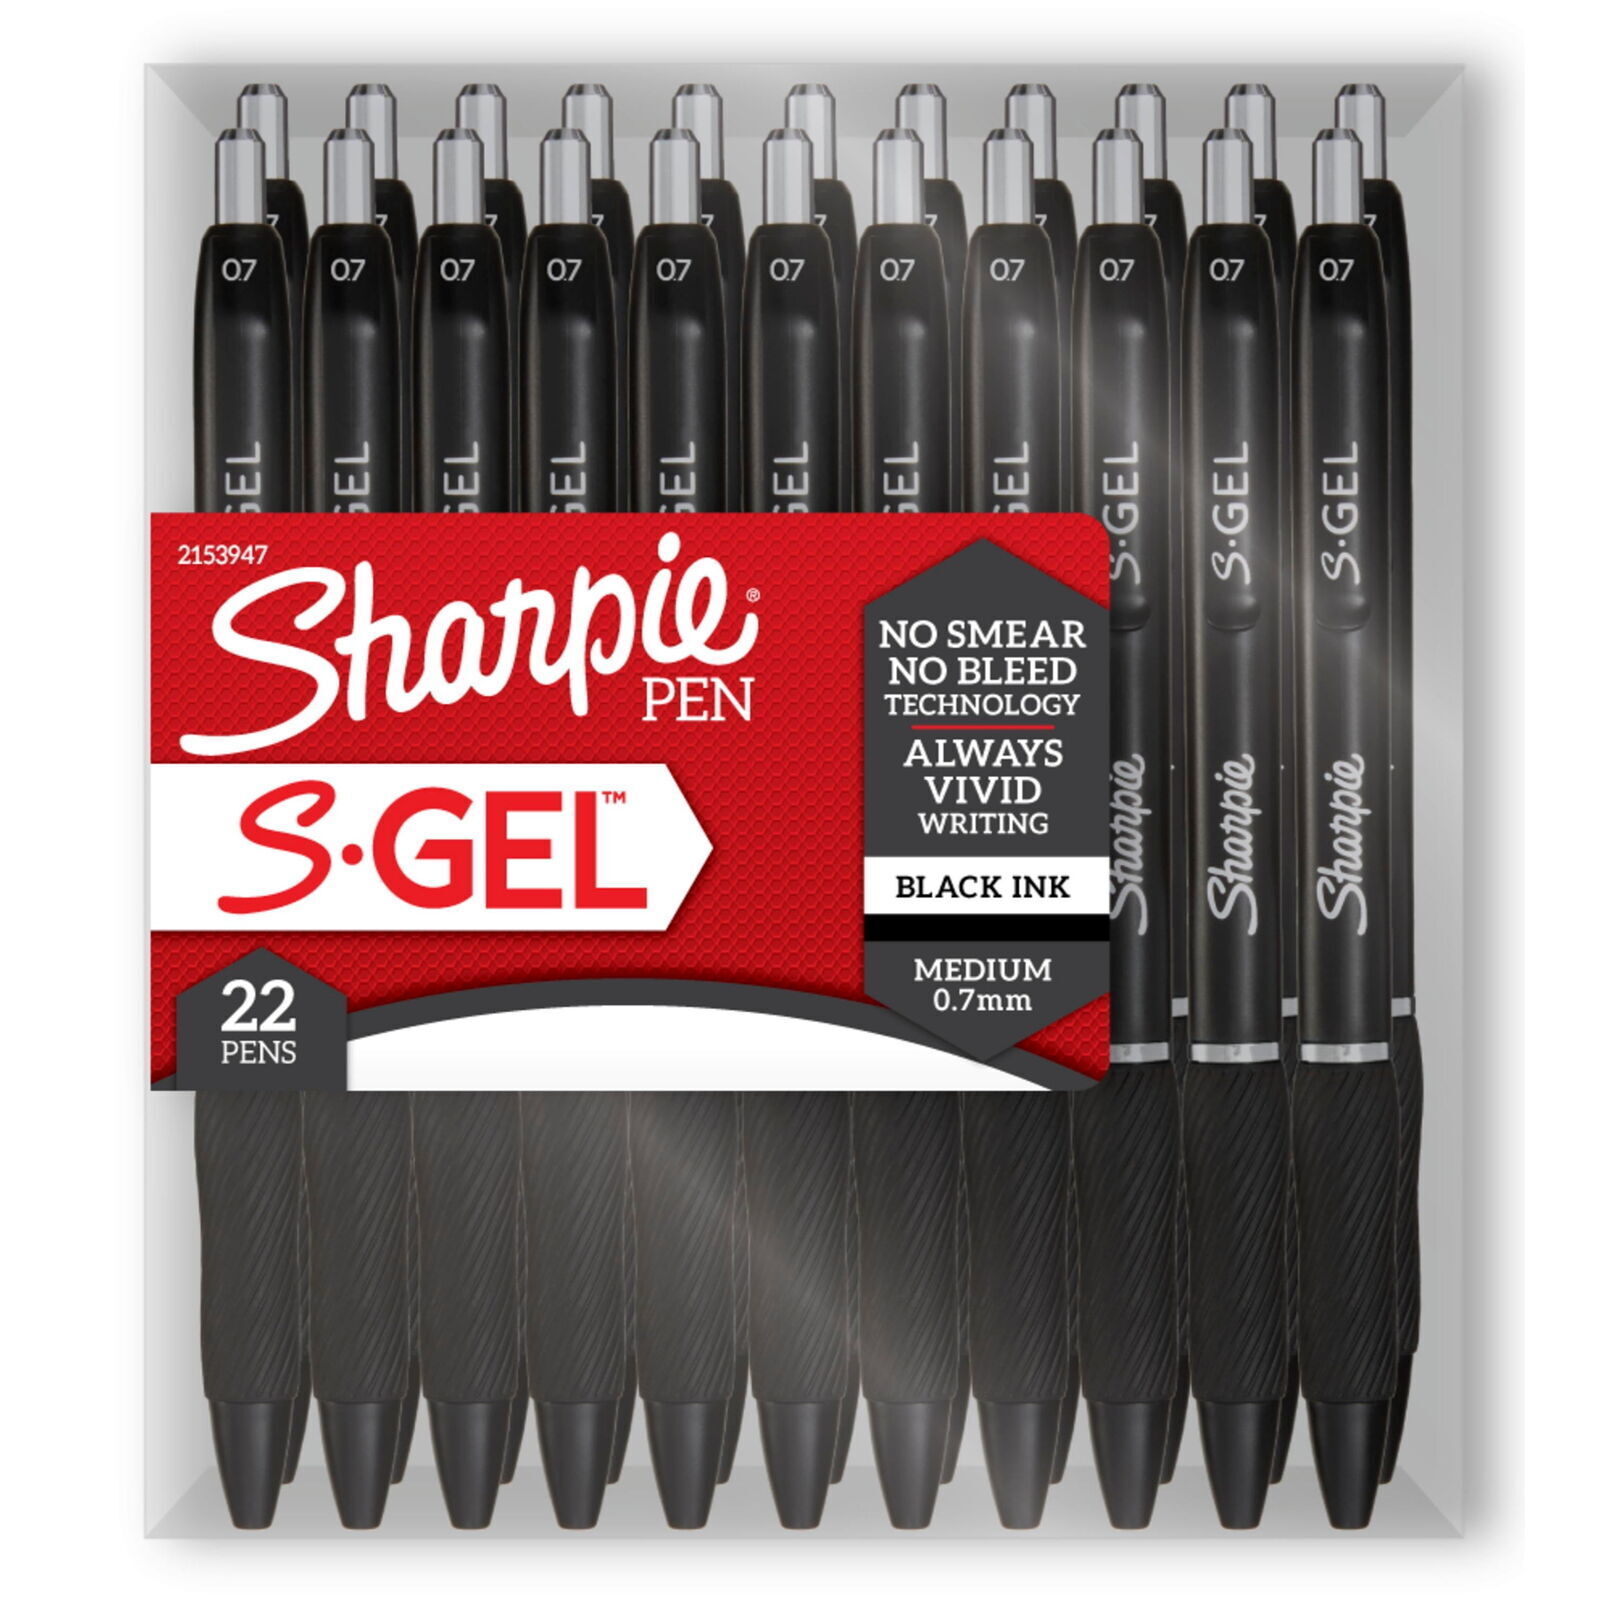 Sharpie S-Gel Pens, Medium Point (0.7 mm), Black Ink, 22 Count